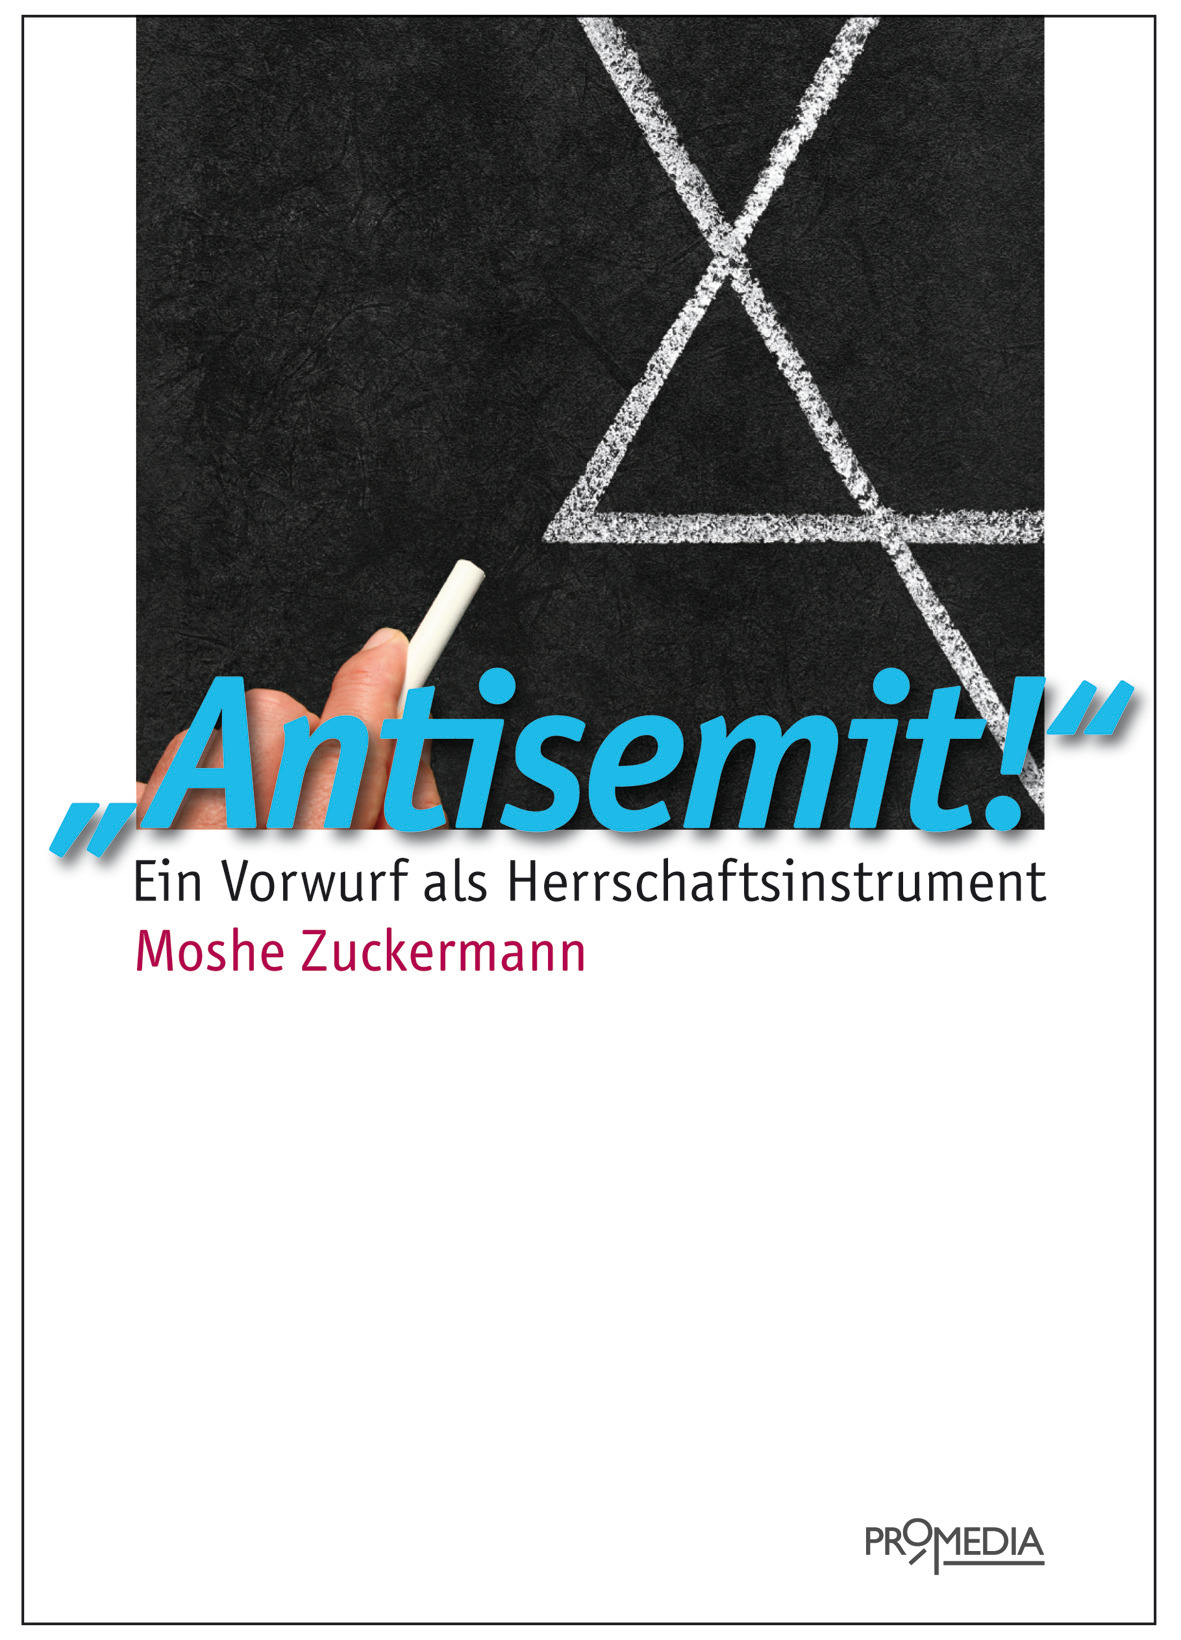 [Cover] Antisemit!